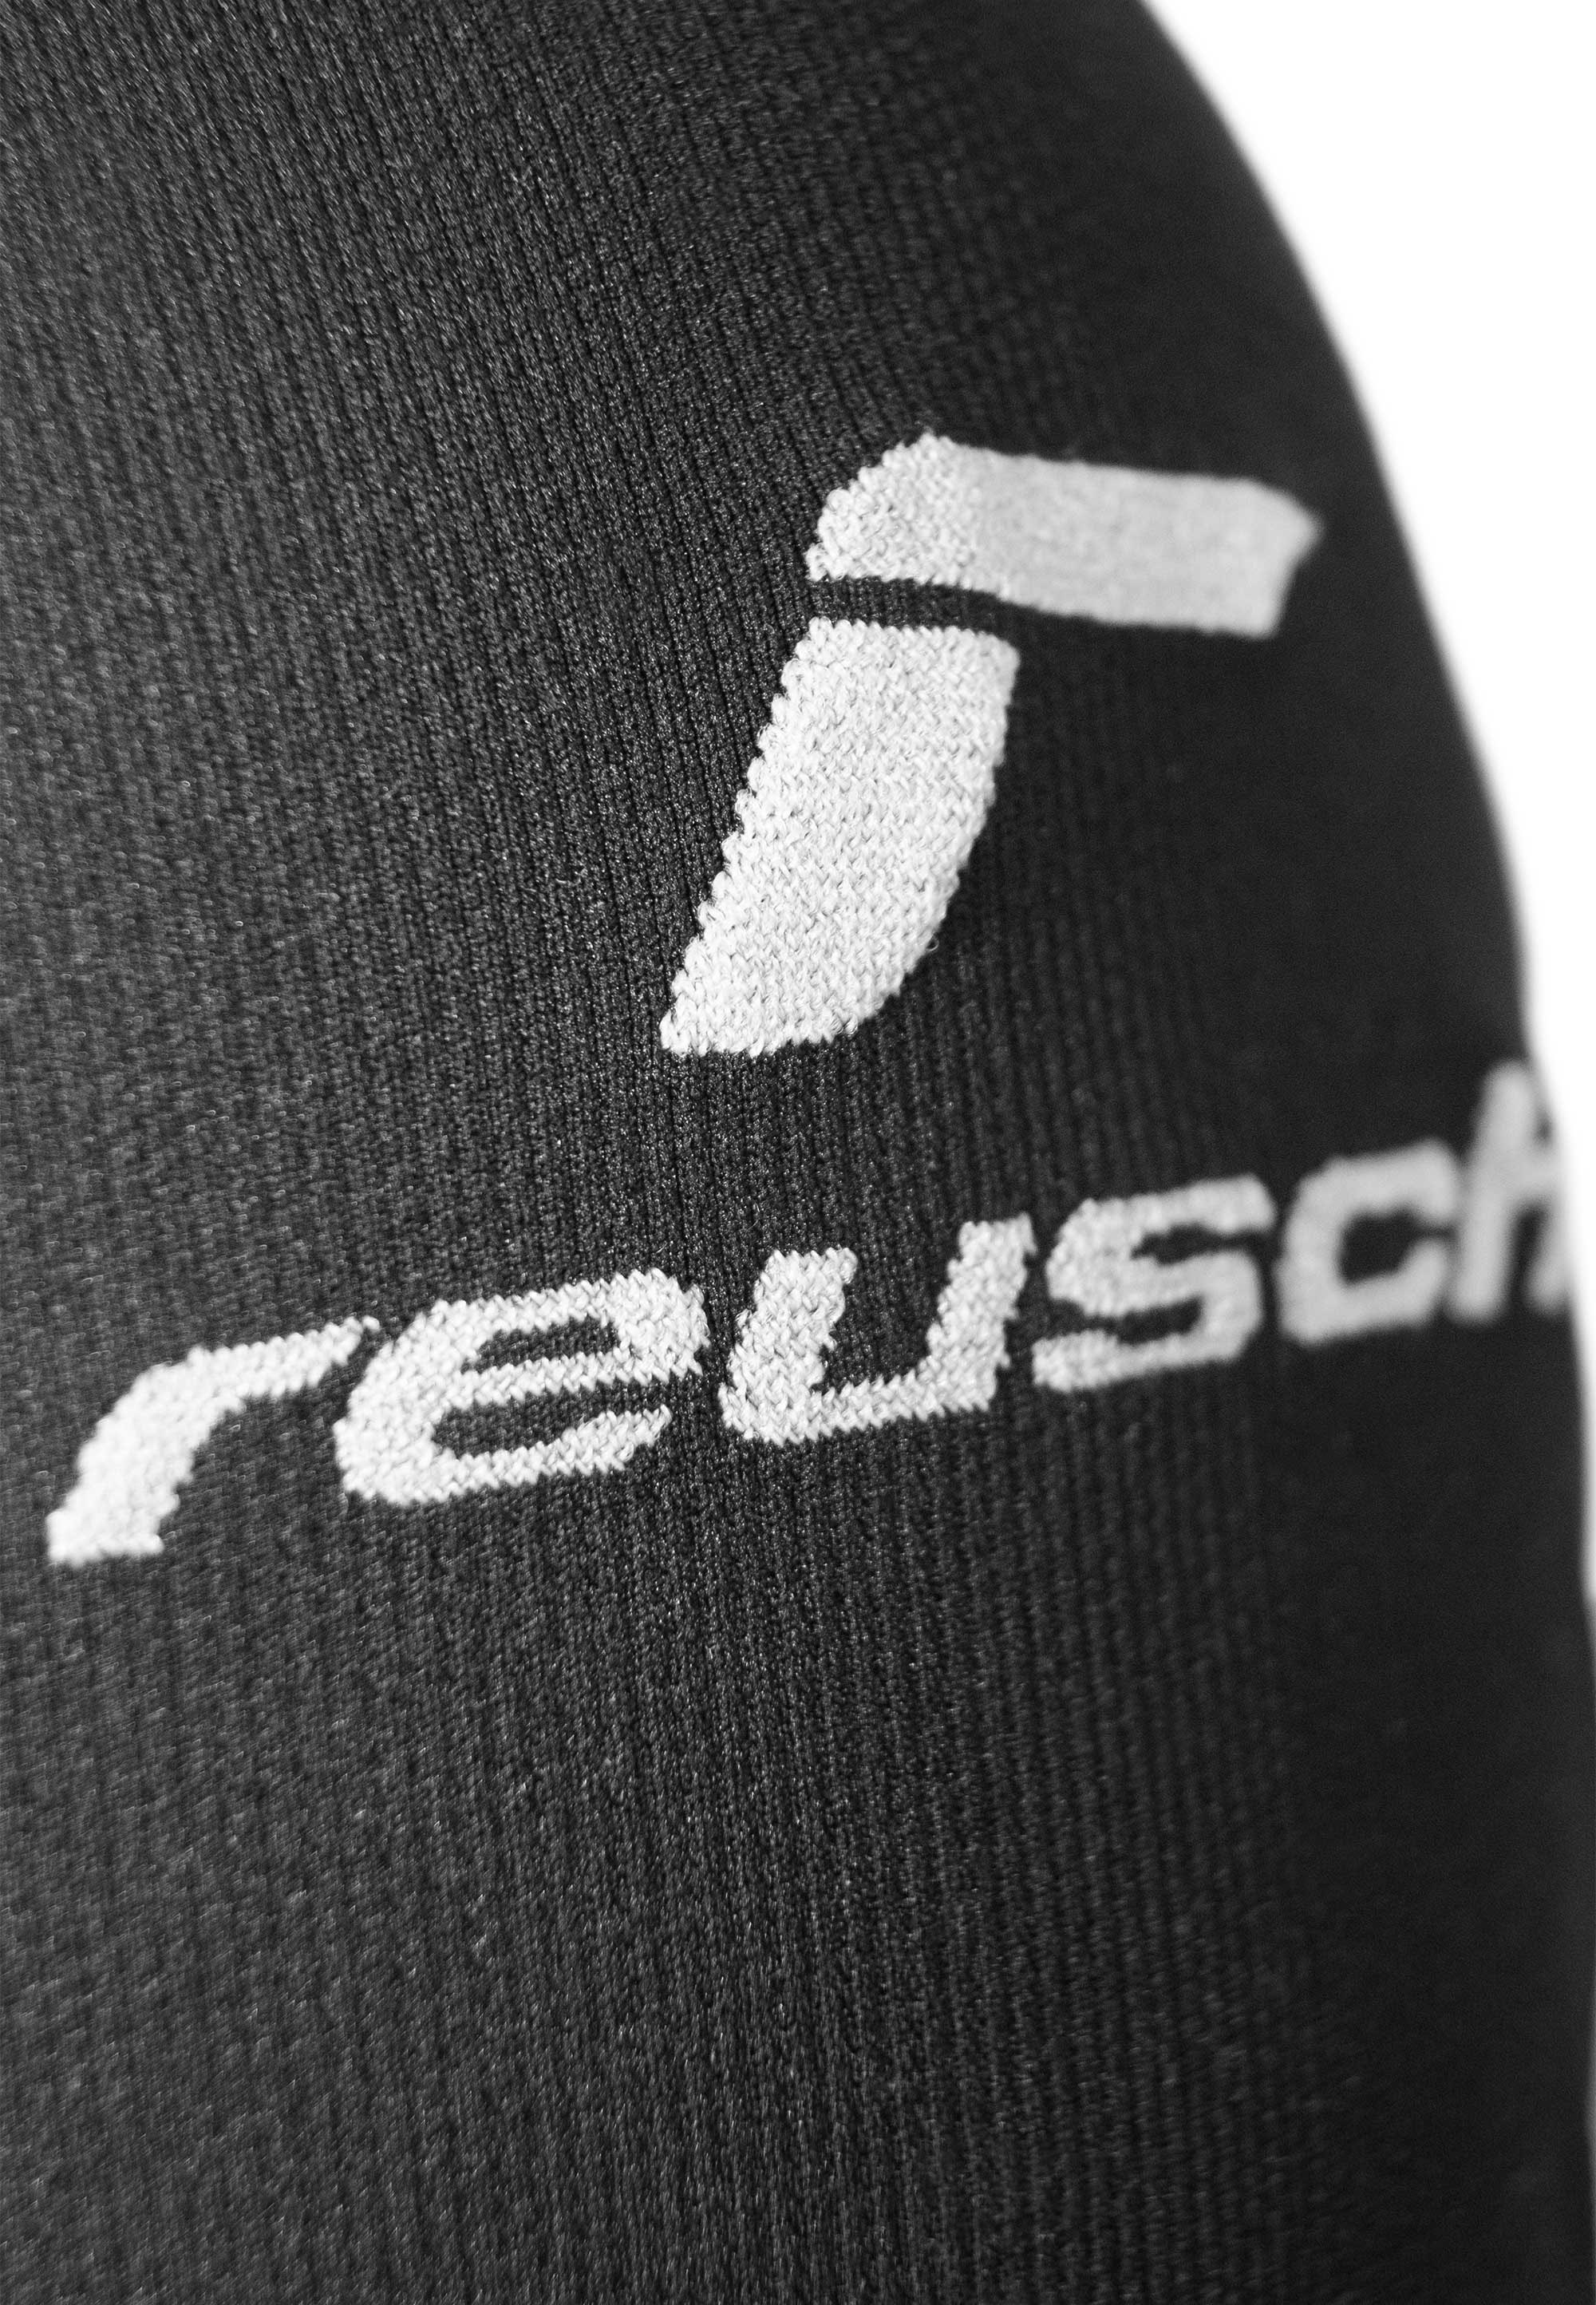 Reusch Funktionsshirt »Reusch Underwear Set Man 3/4 Pants«, mit hohem Tragekomfort